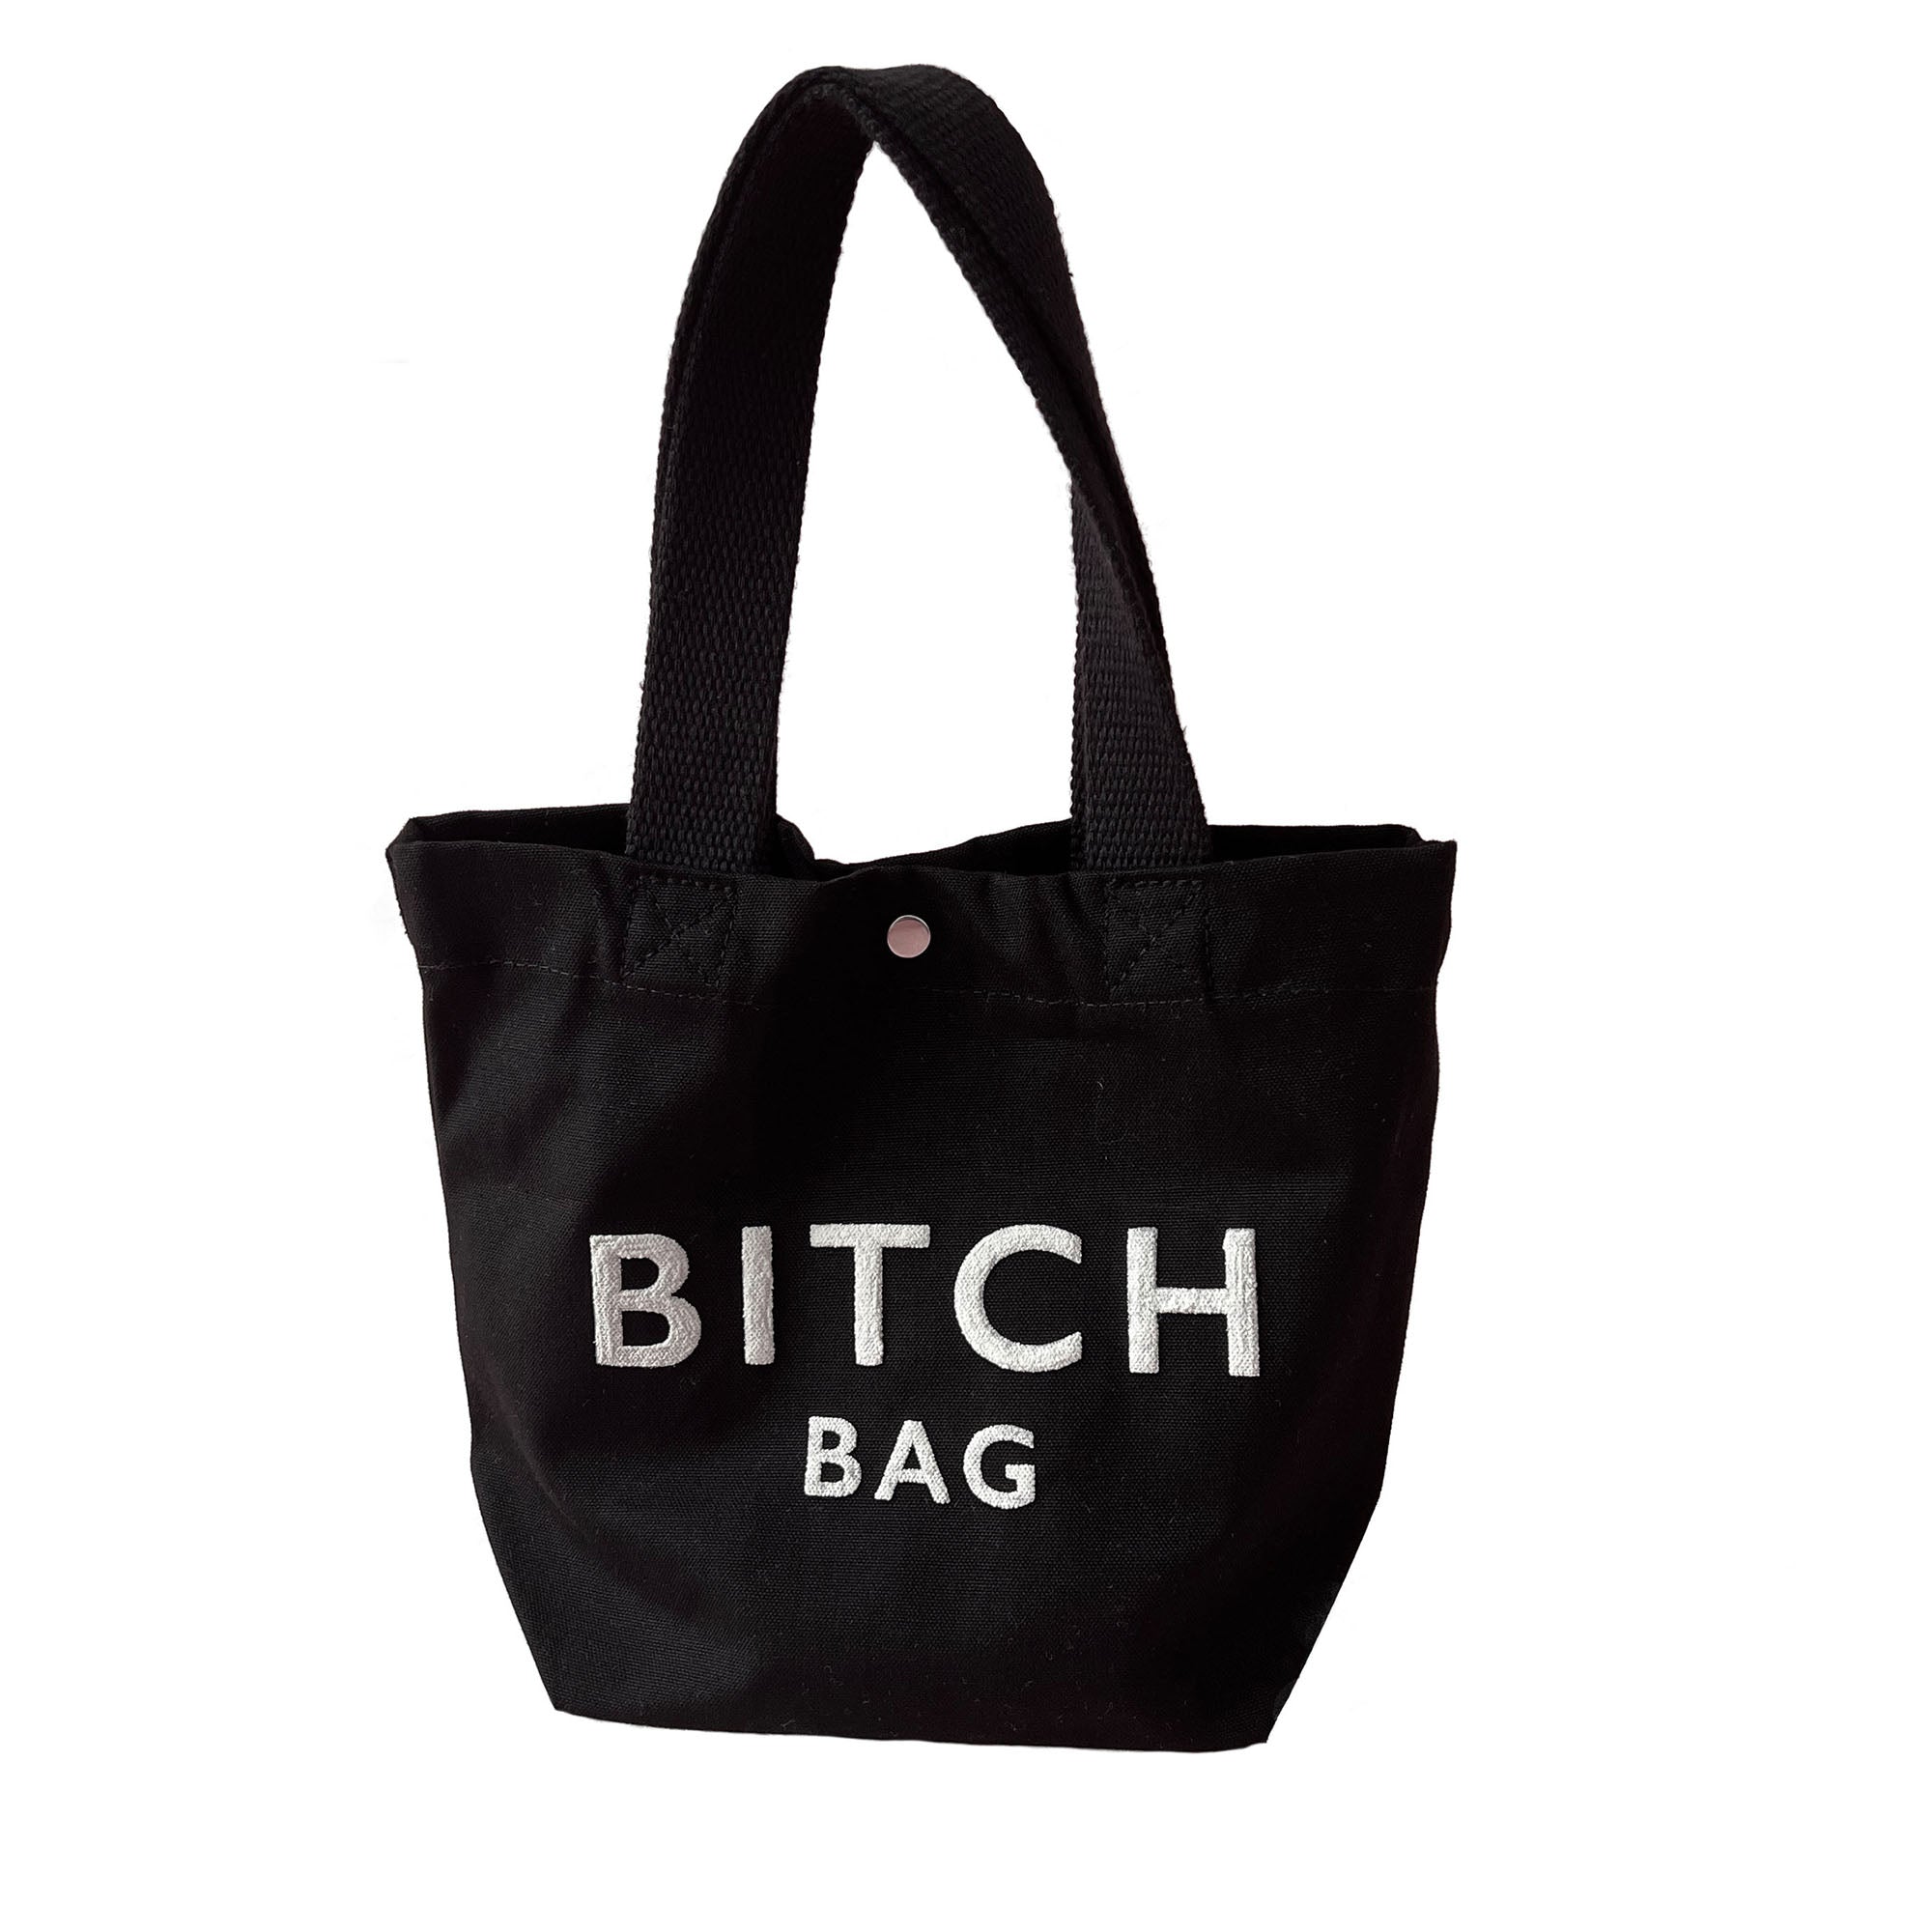 Bitch bag